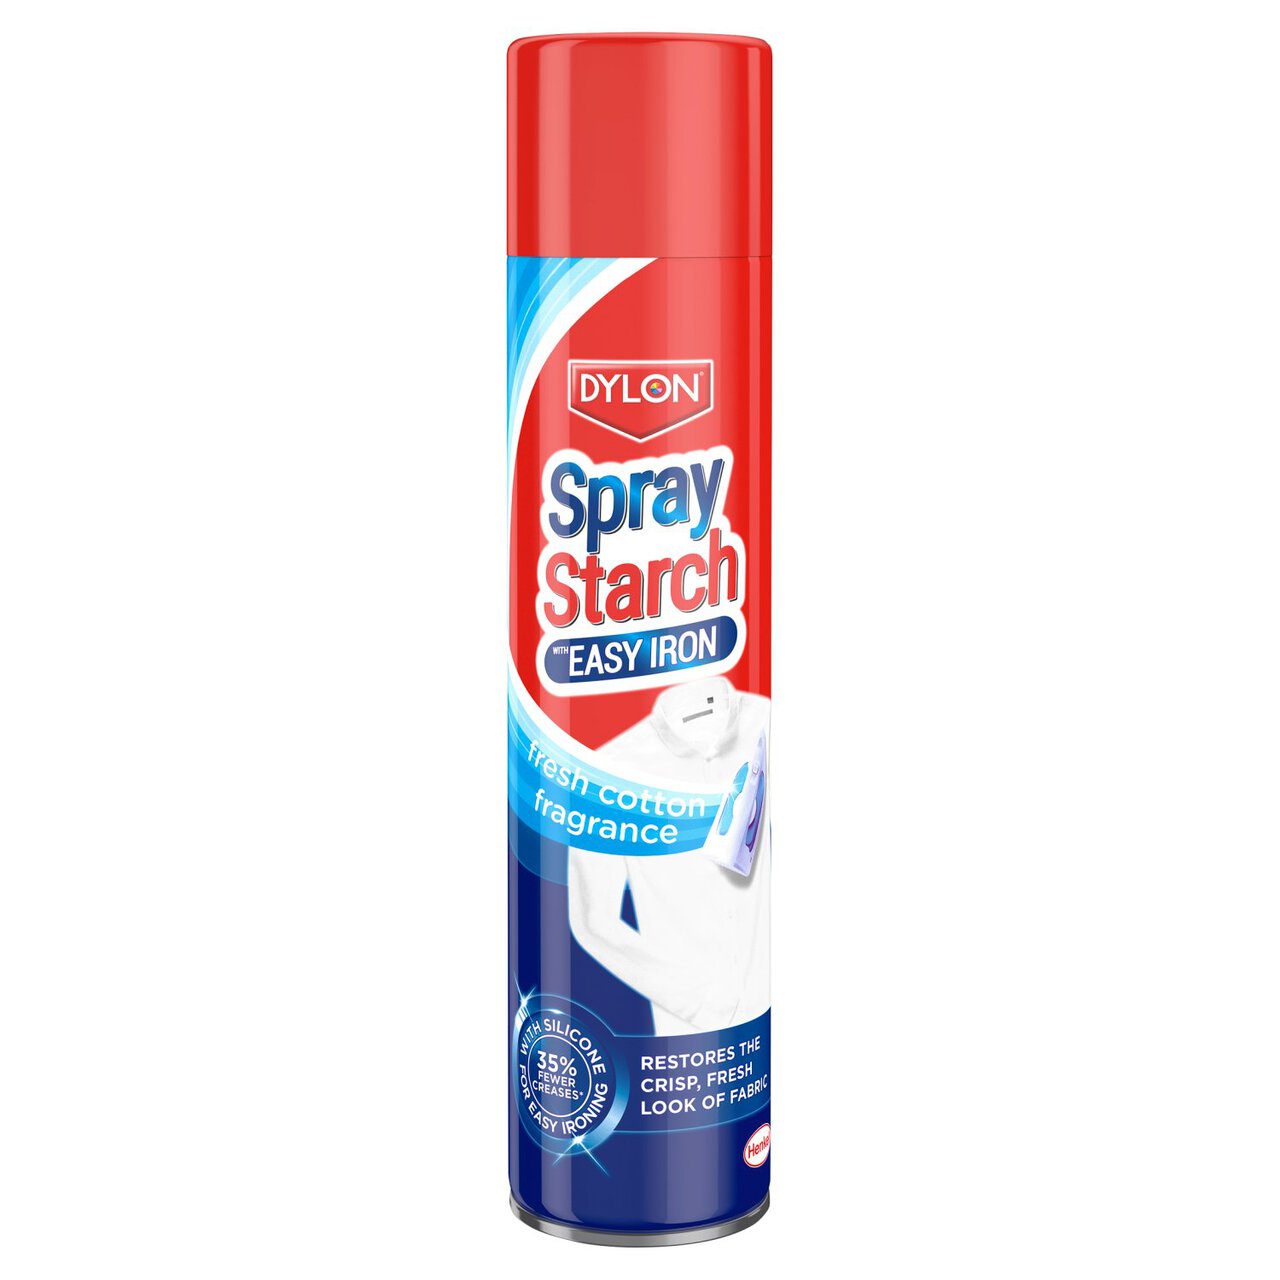 Blueoxy Fabric Starch & Easy Iron Spray 500ml - Blueoxyshop